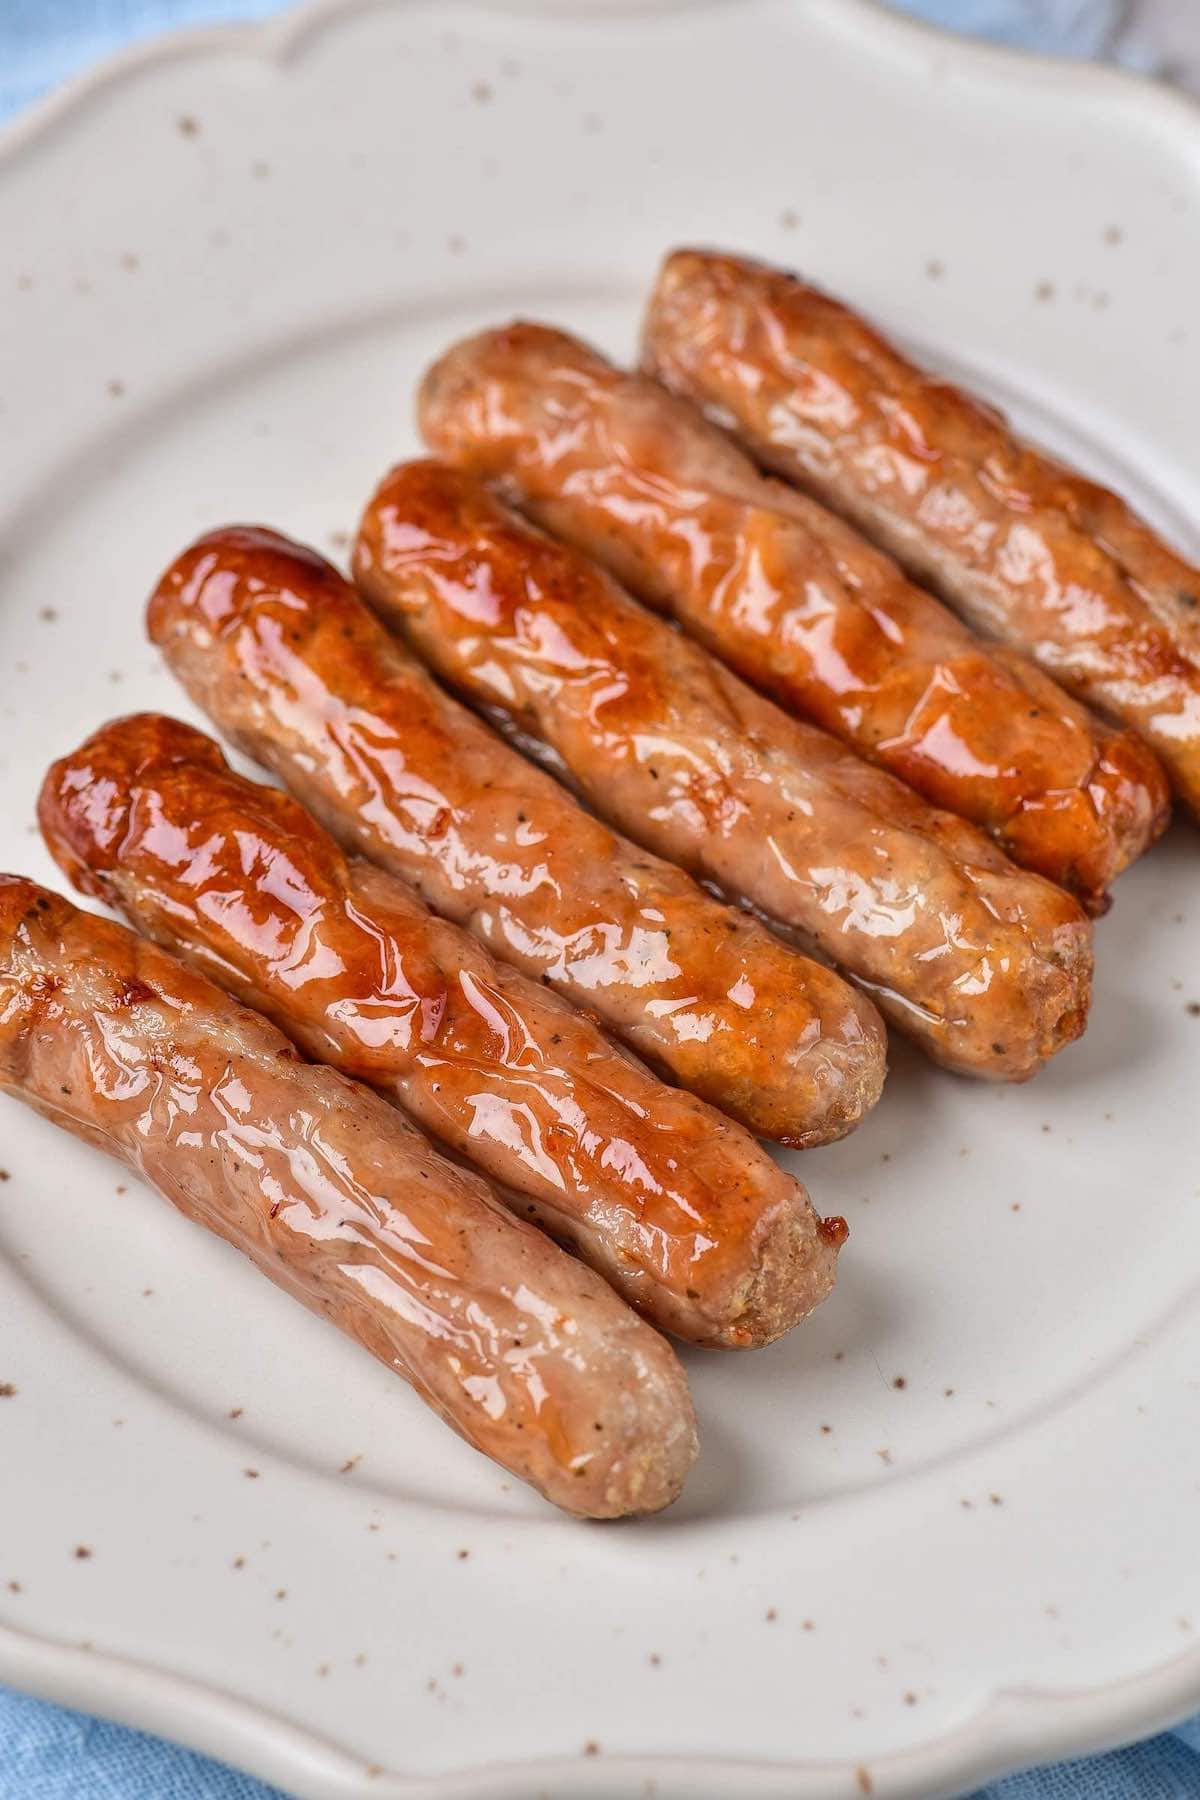 sausage in air fryer.